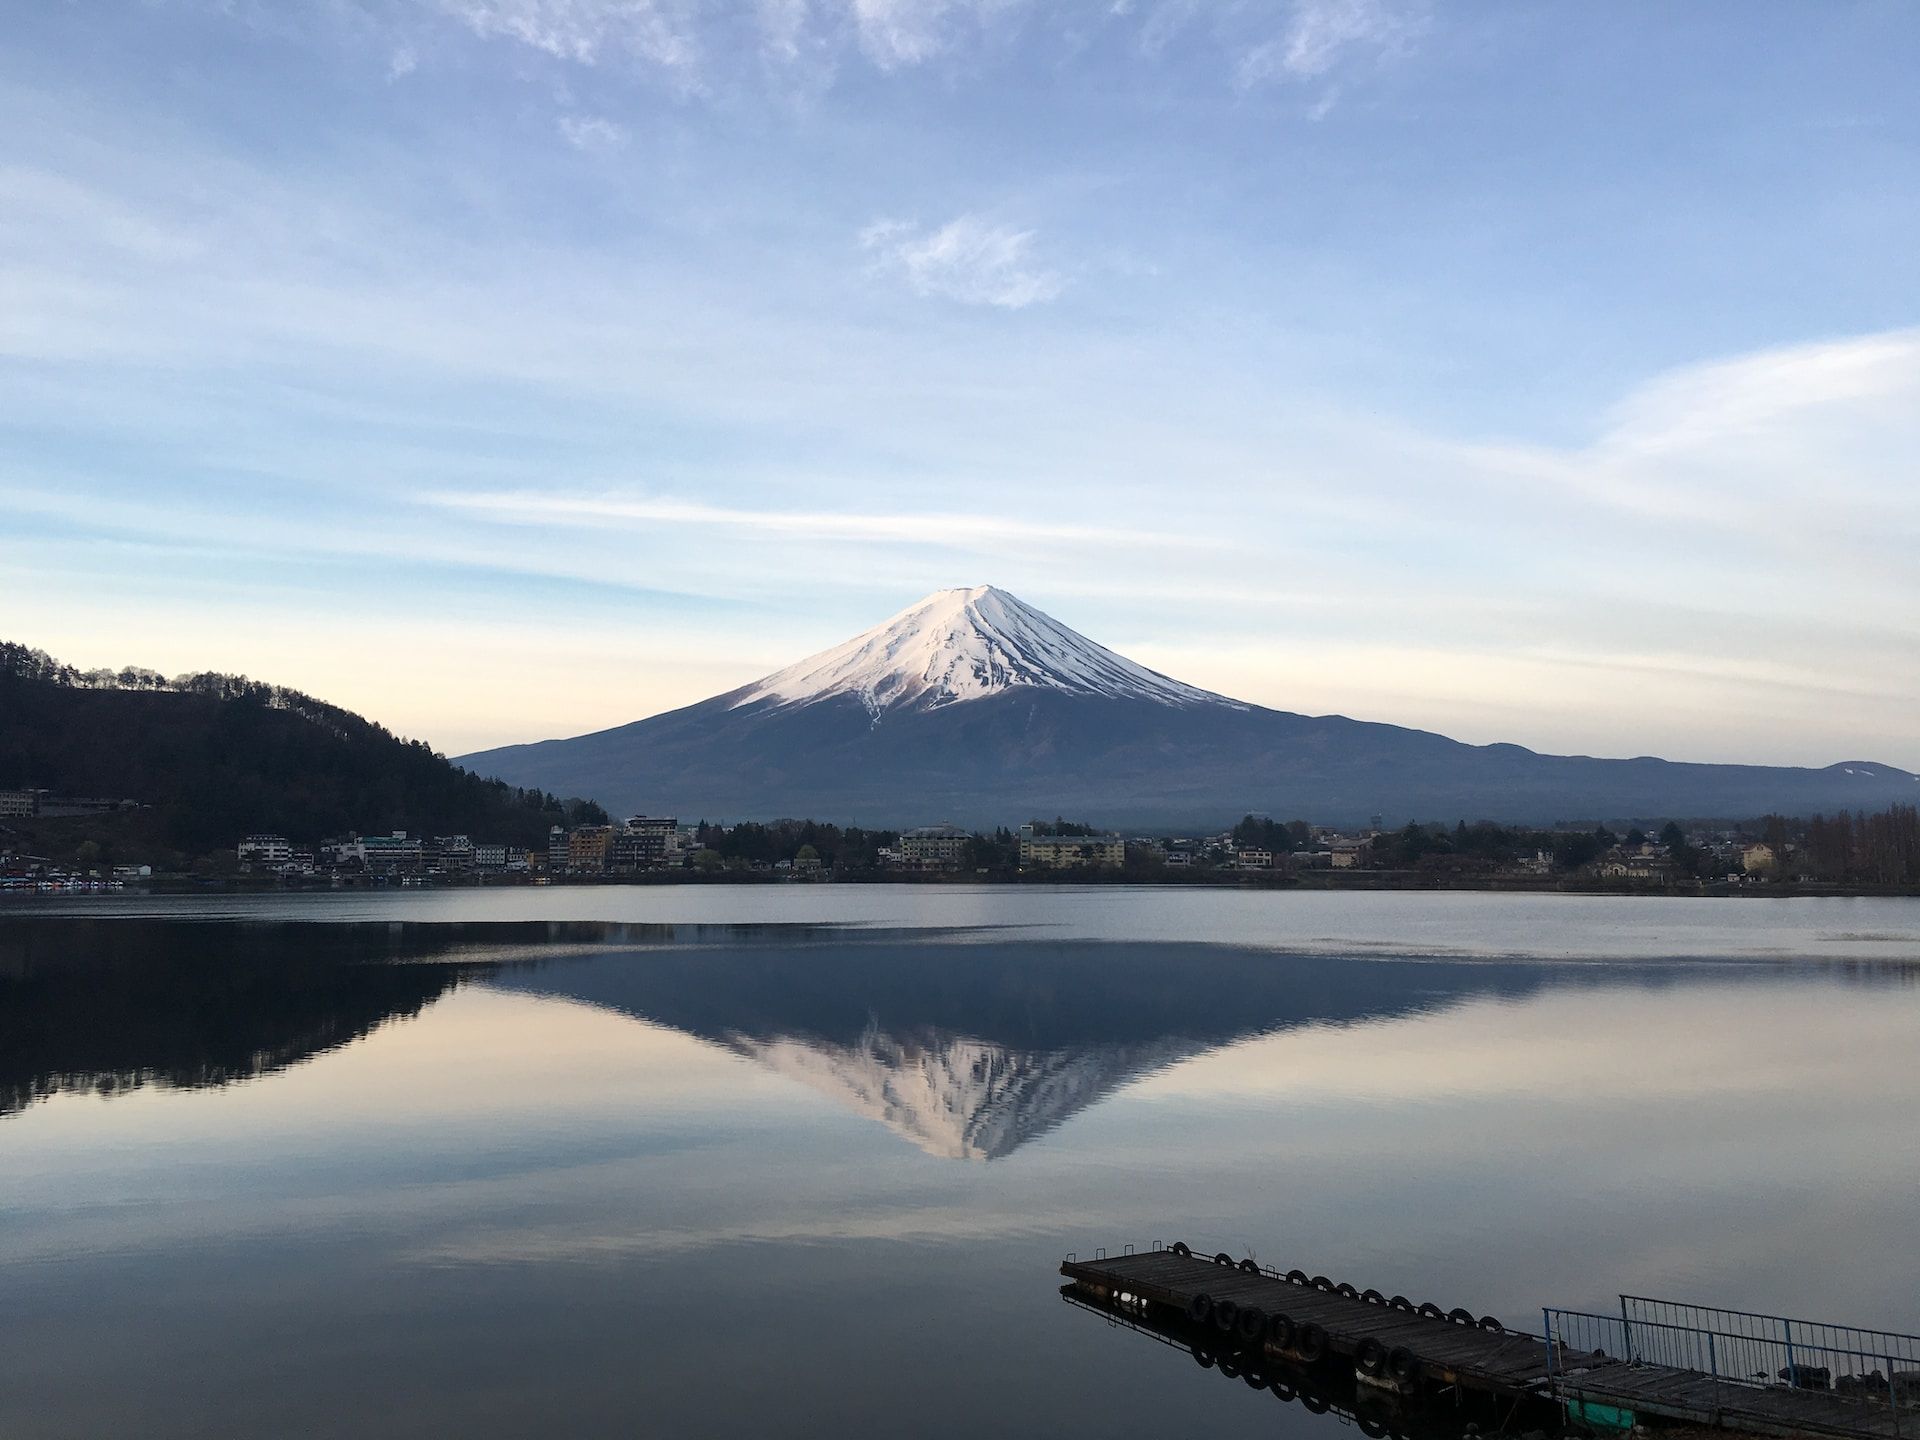 A view of Mount Fuji